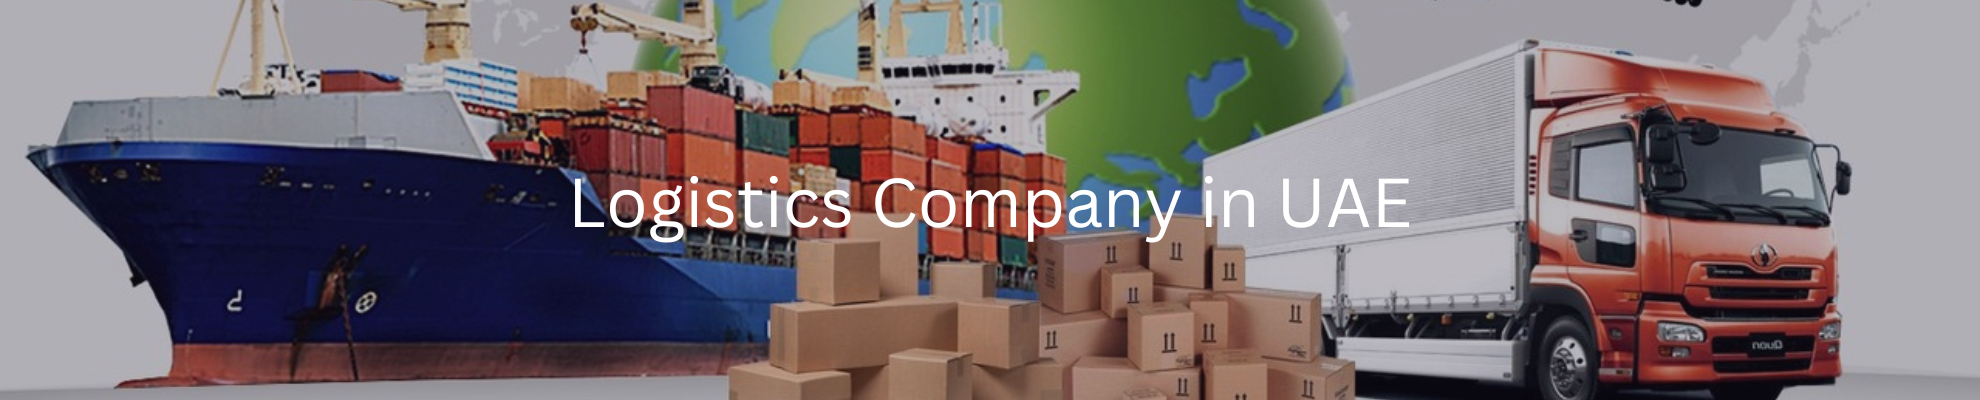 Logistics Company in UAE | Riseonic Shipping Lines